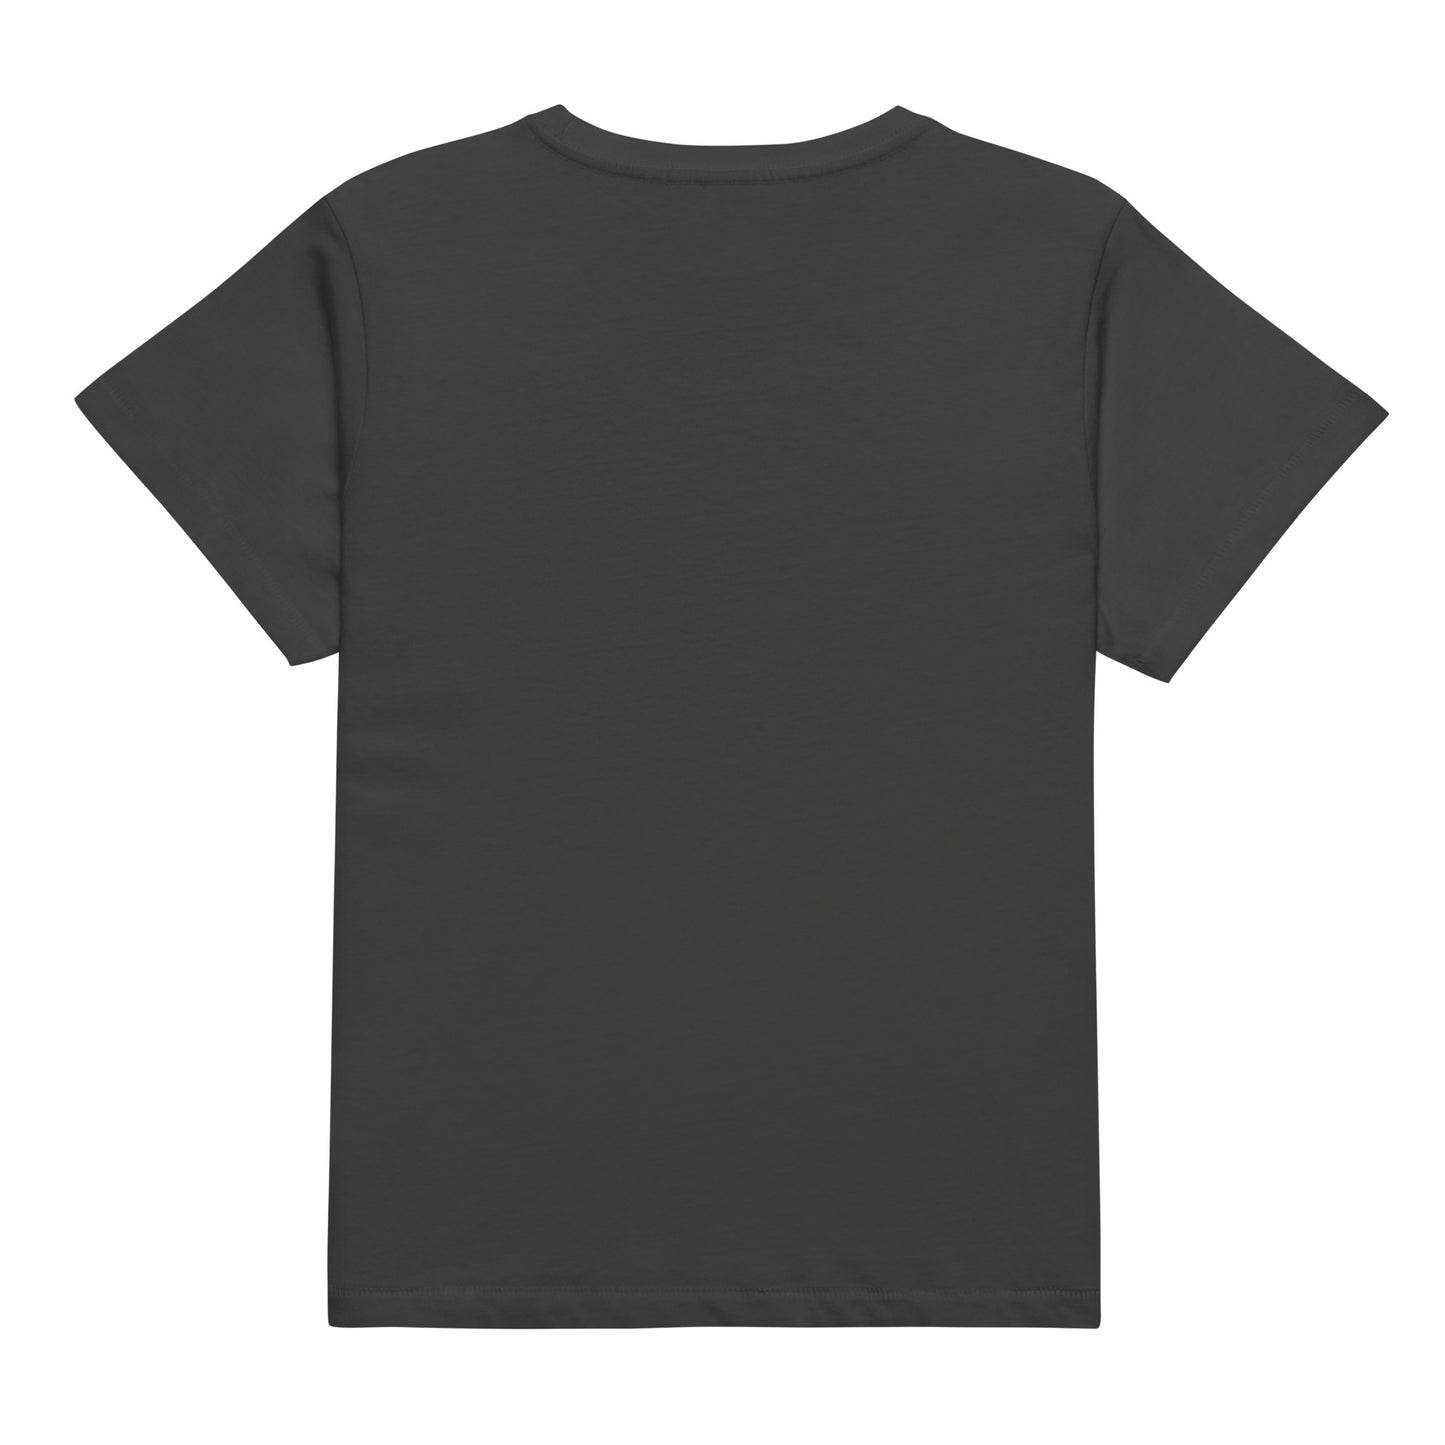 Q111 - Ladies Highwaist T-shirt (Get set! : Charcoal)